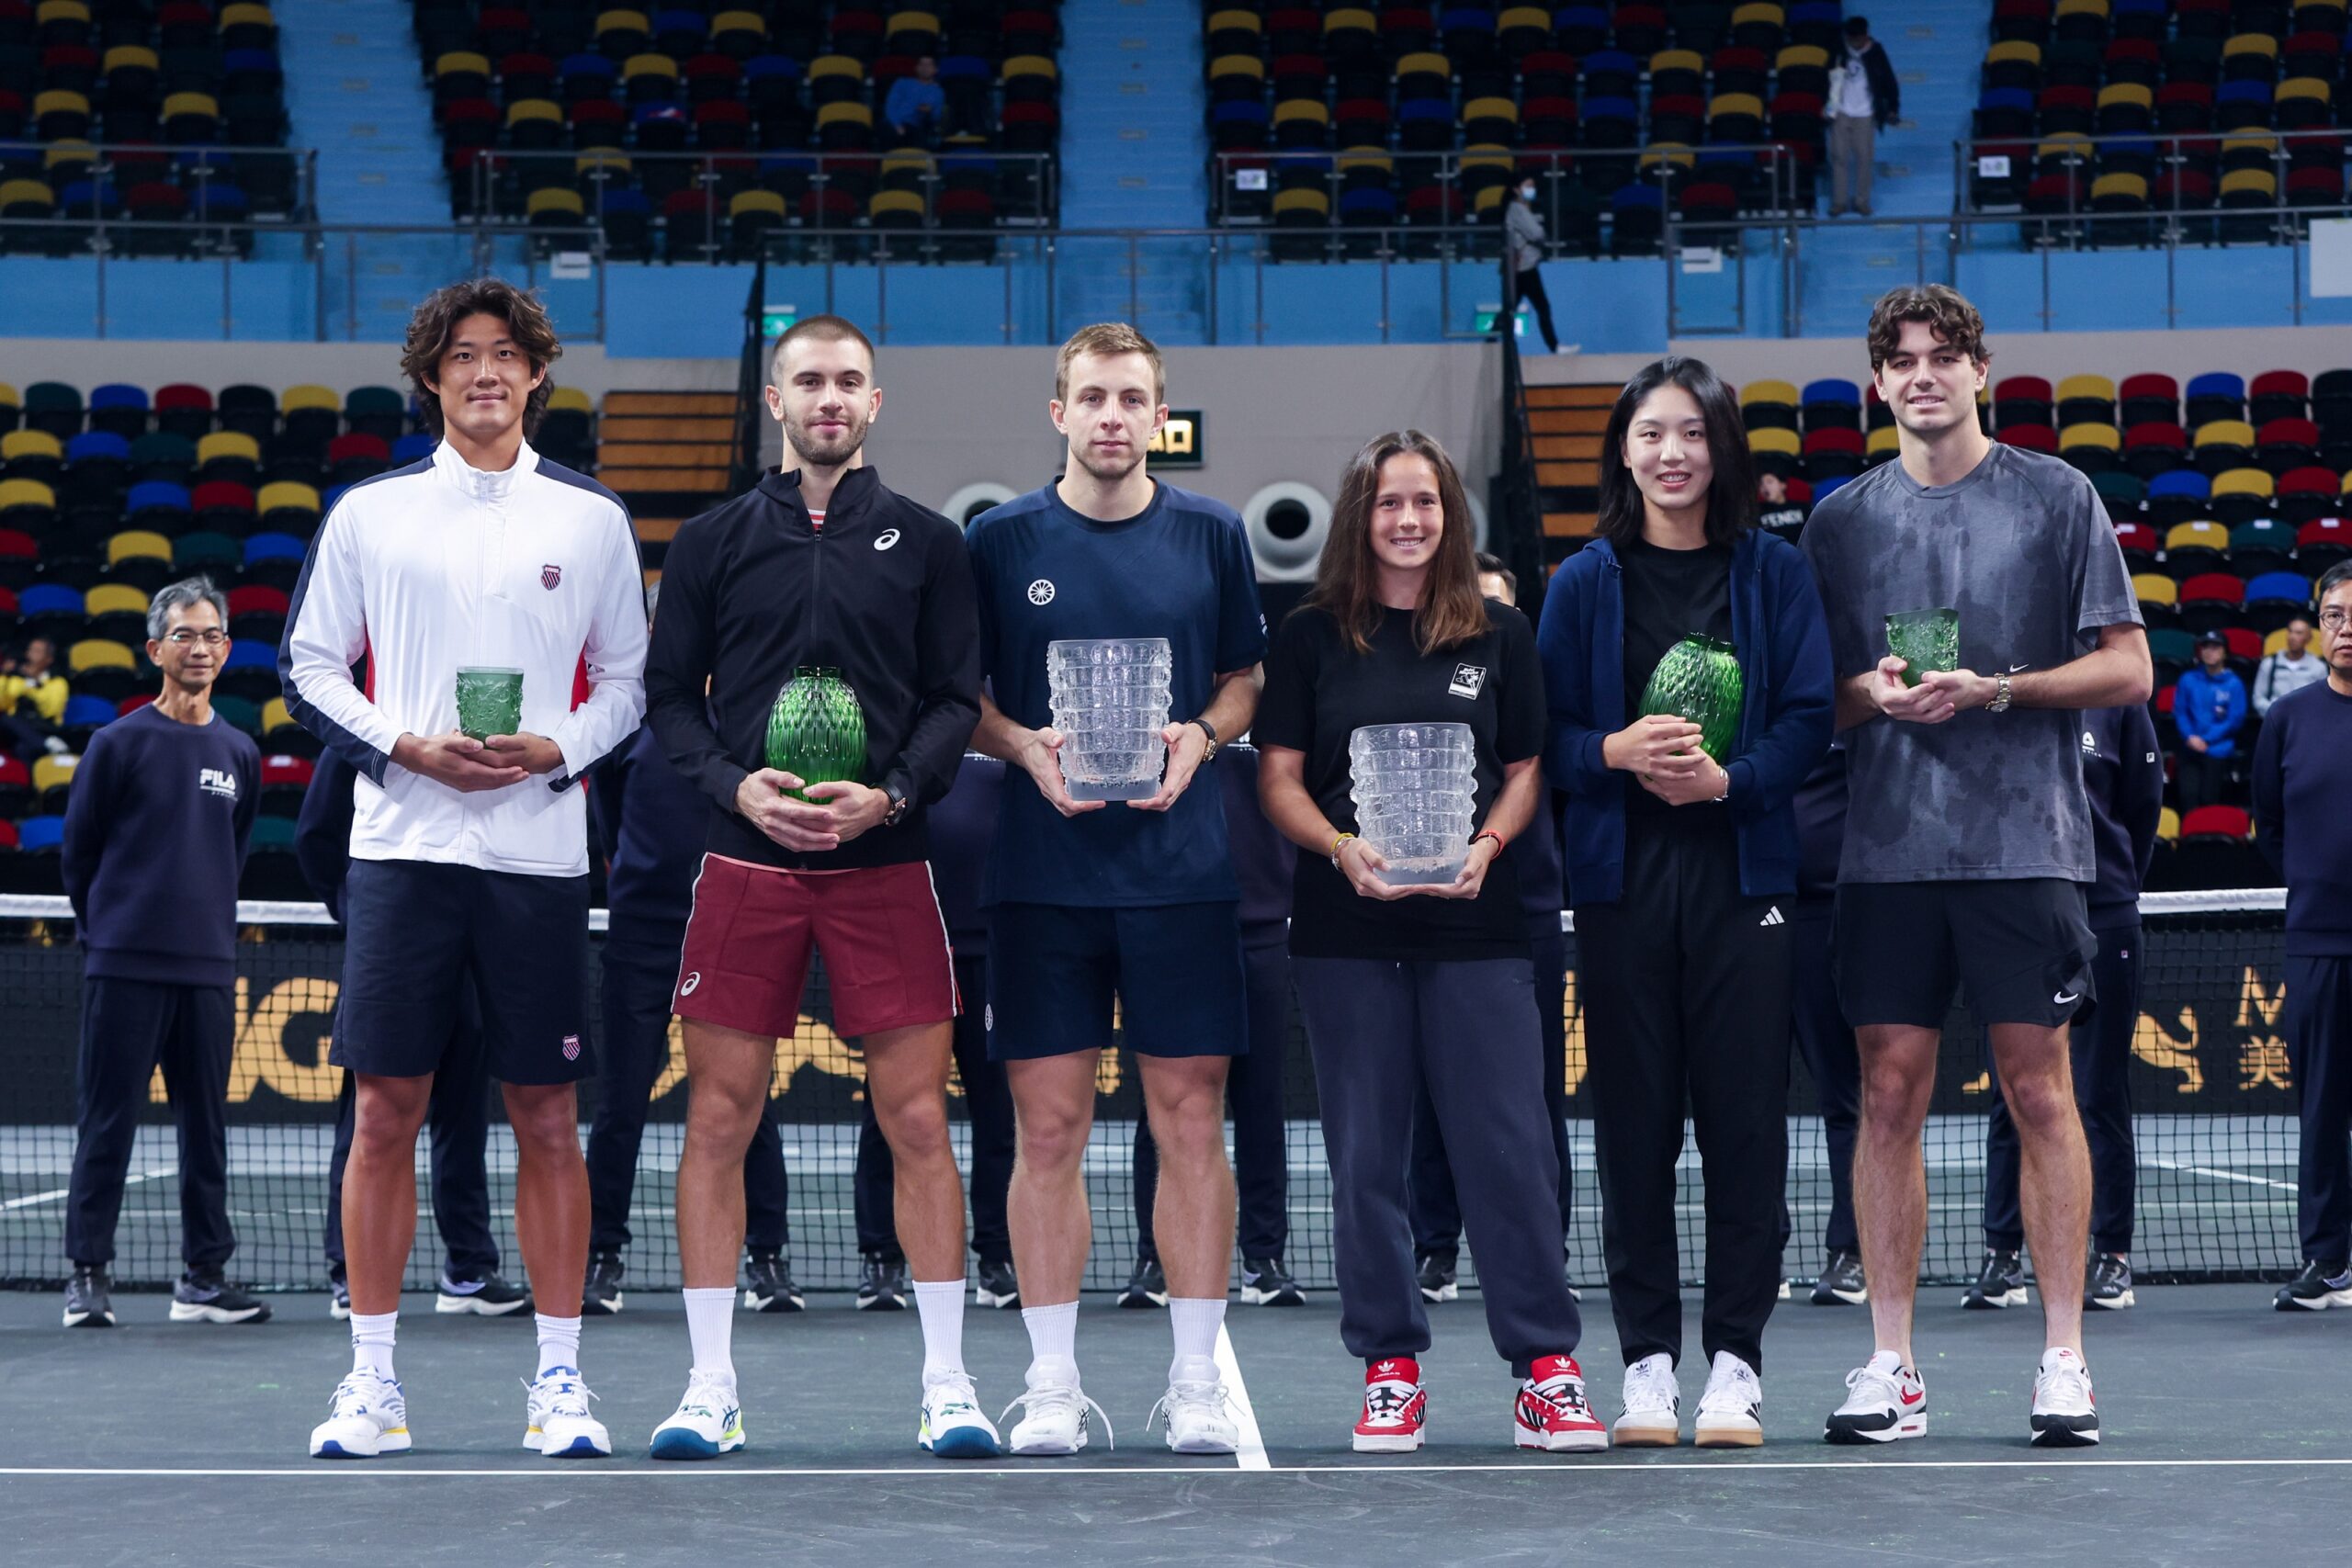 Griekspoor Beats Coric To Take Top Honours In MGM Macau Tennis Masters